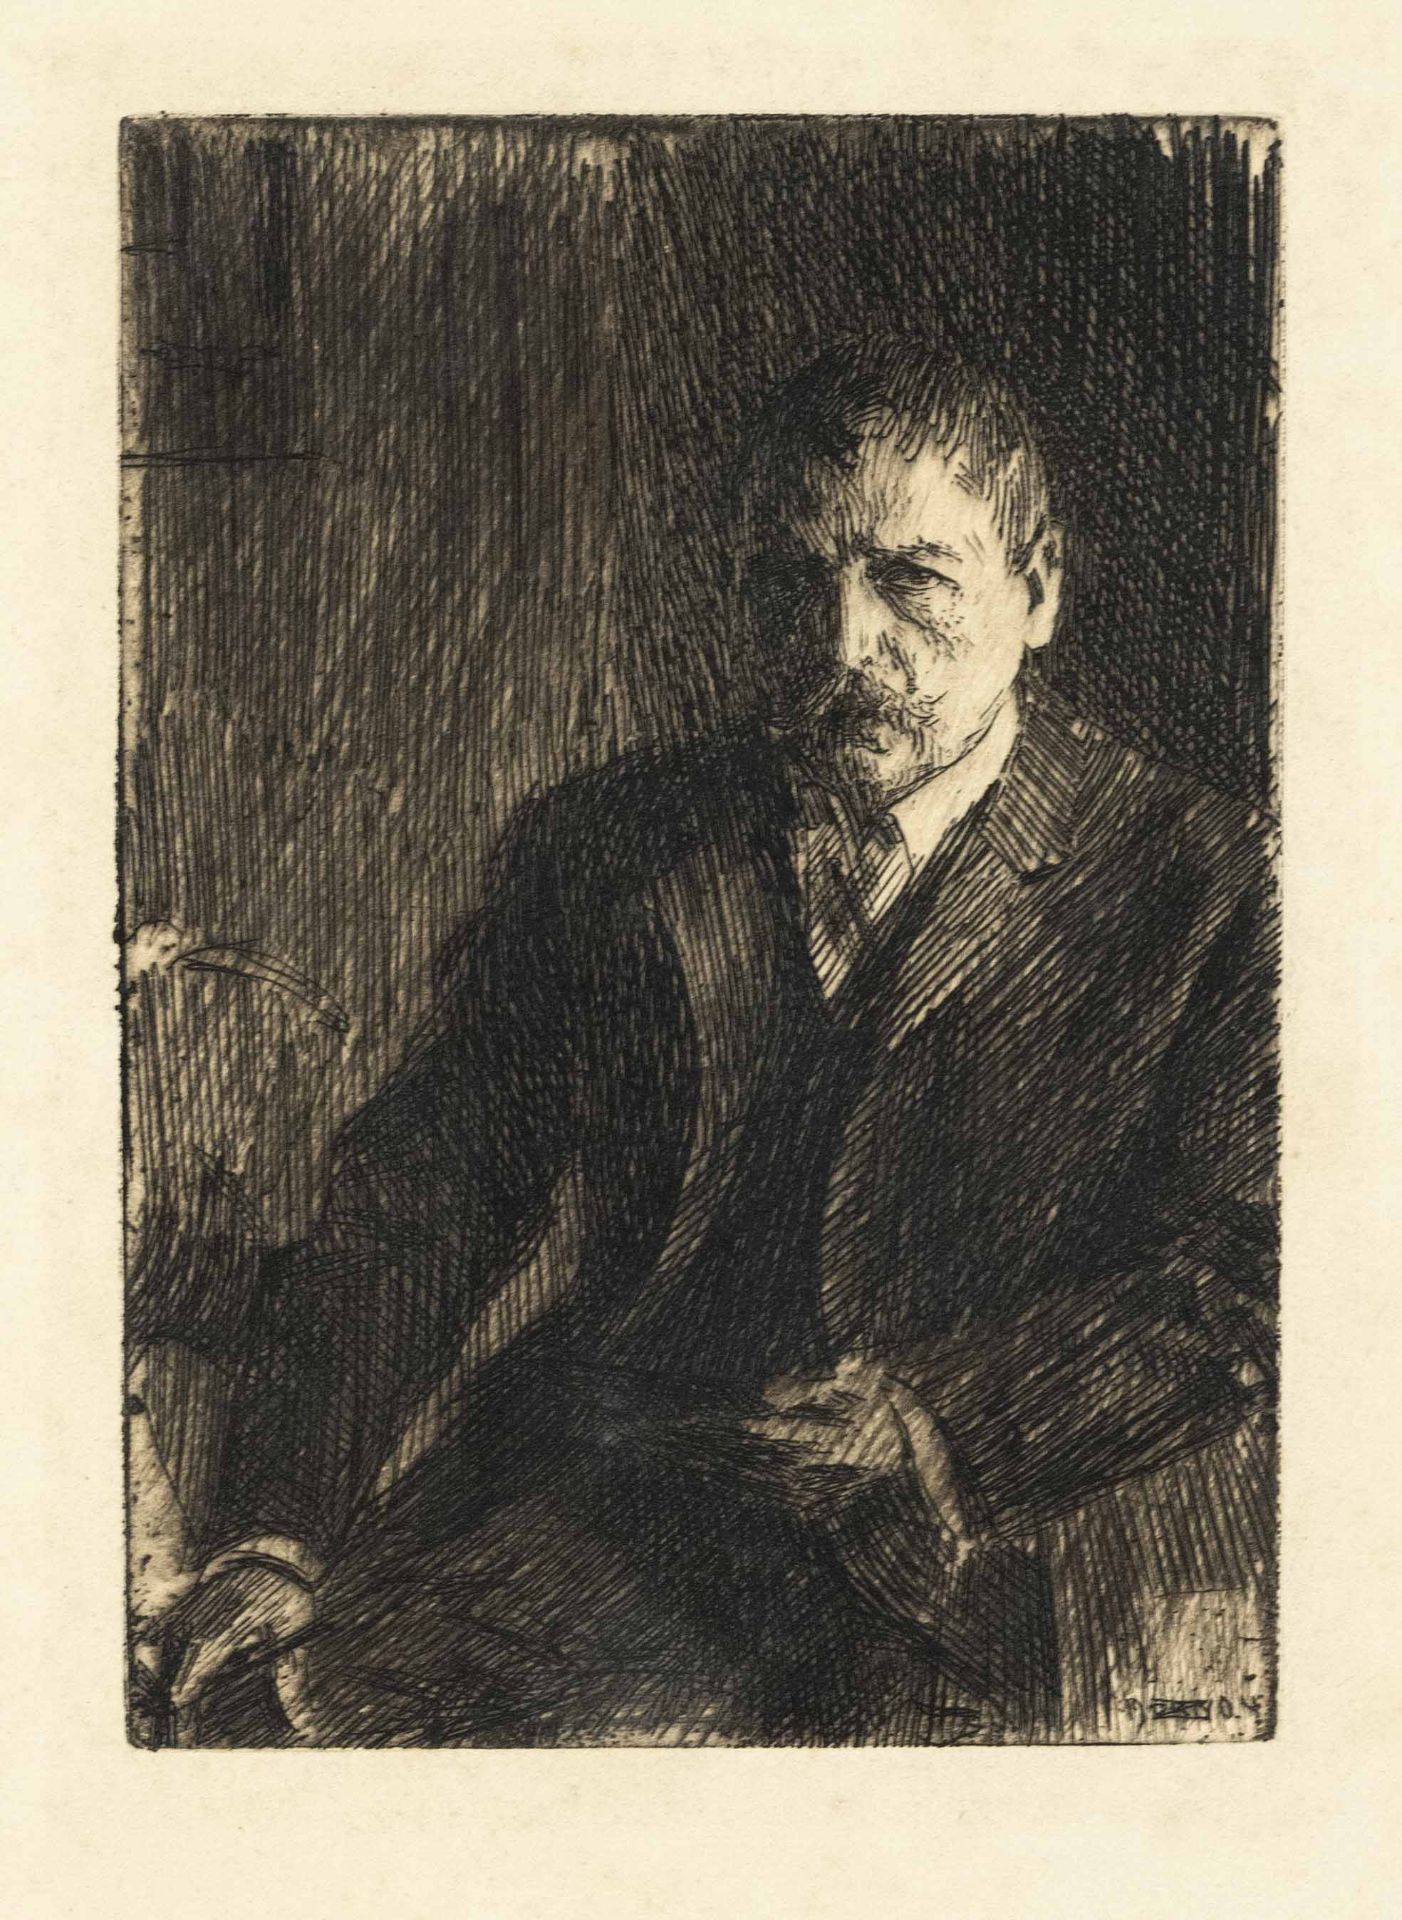 Anders Leonard Zorn (1860-1920)